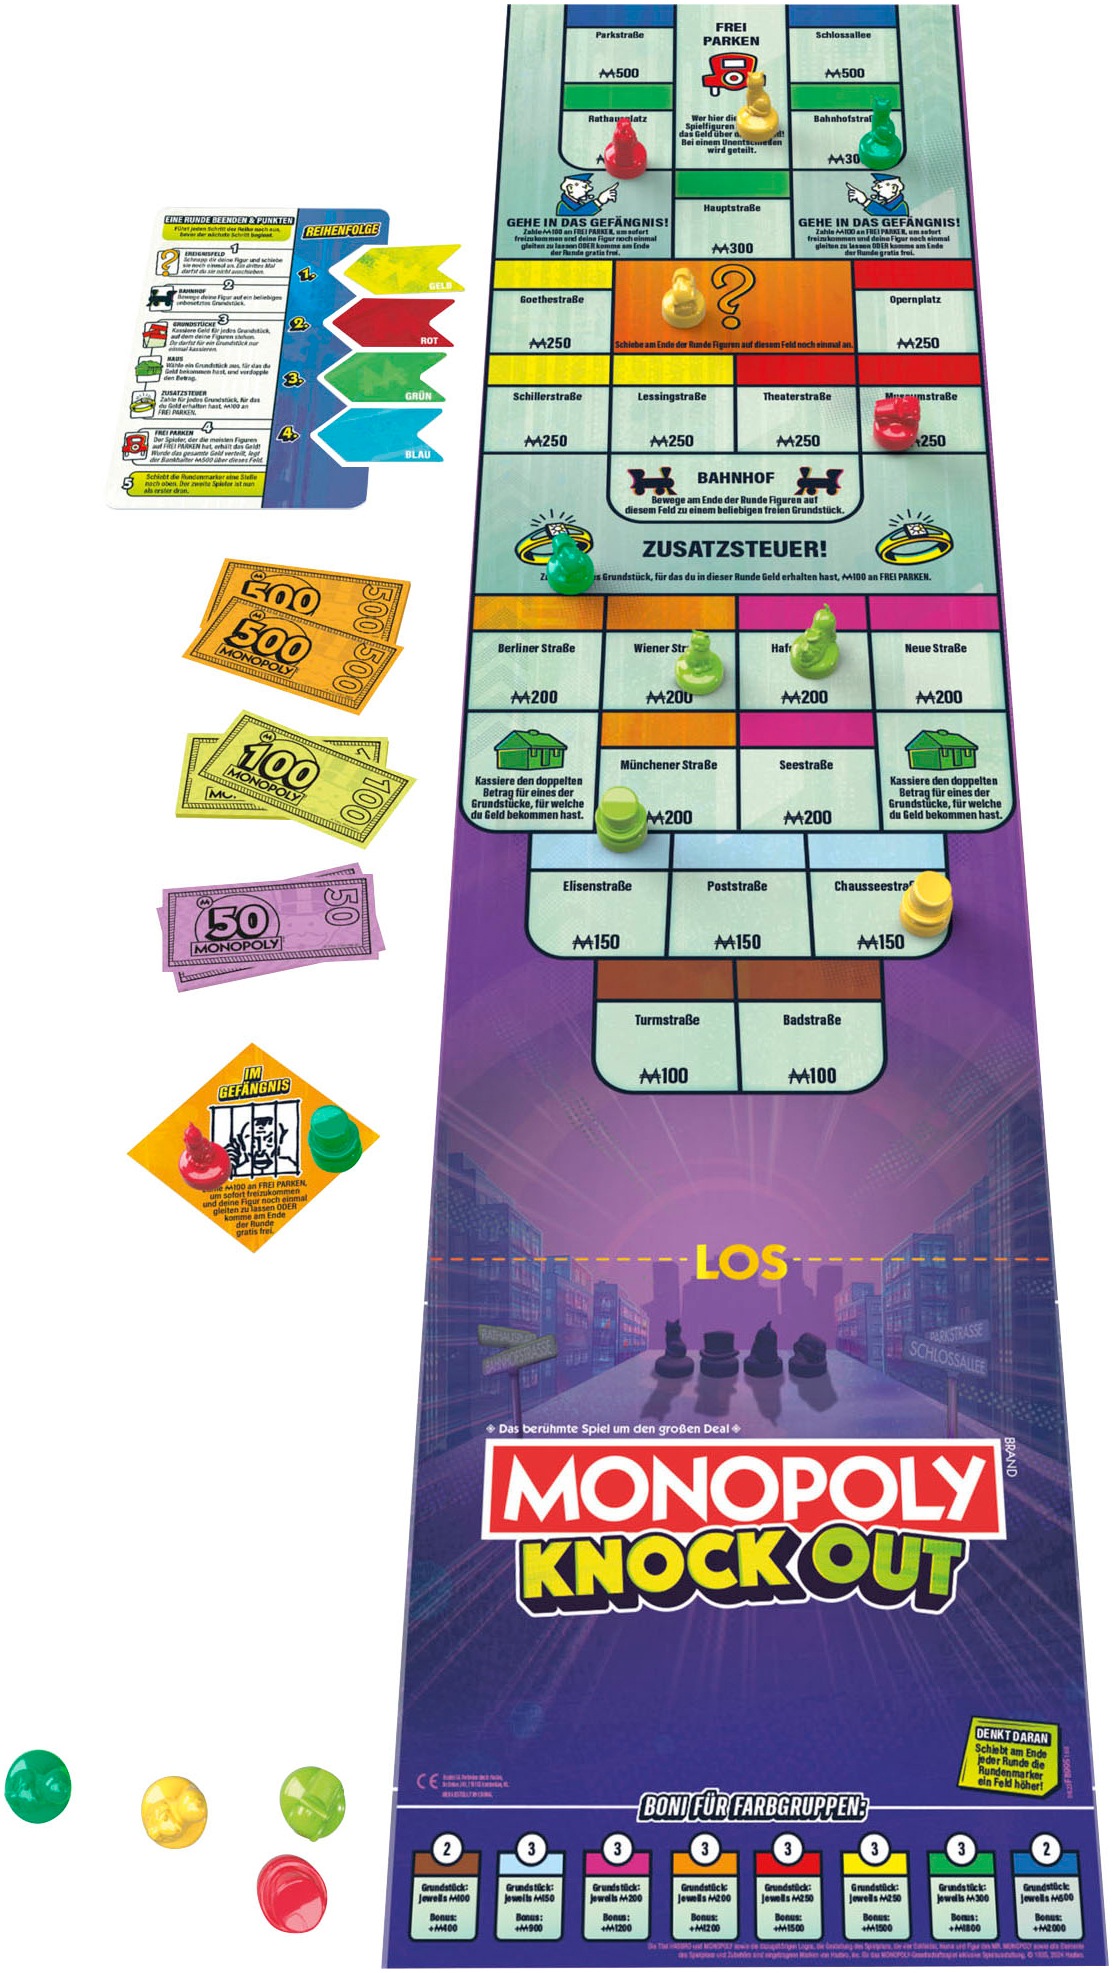 Hasbro Spiel »Hasbro Gaming, Monopoly, Knockout«